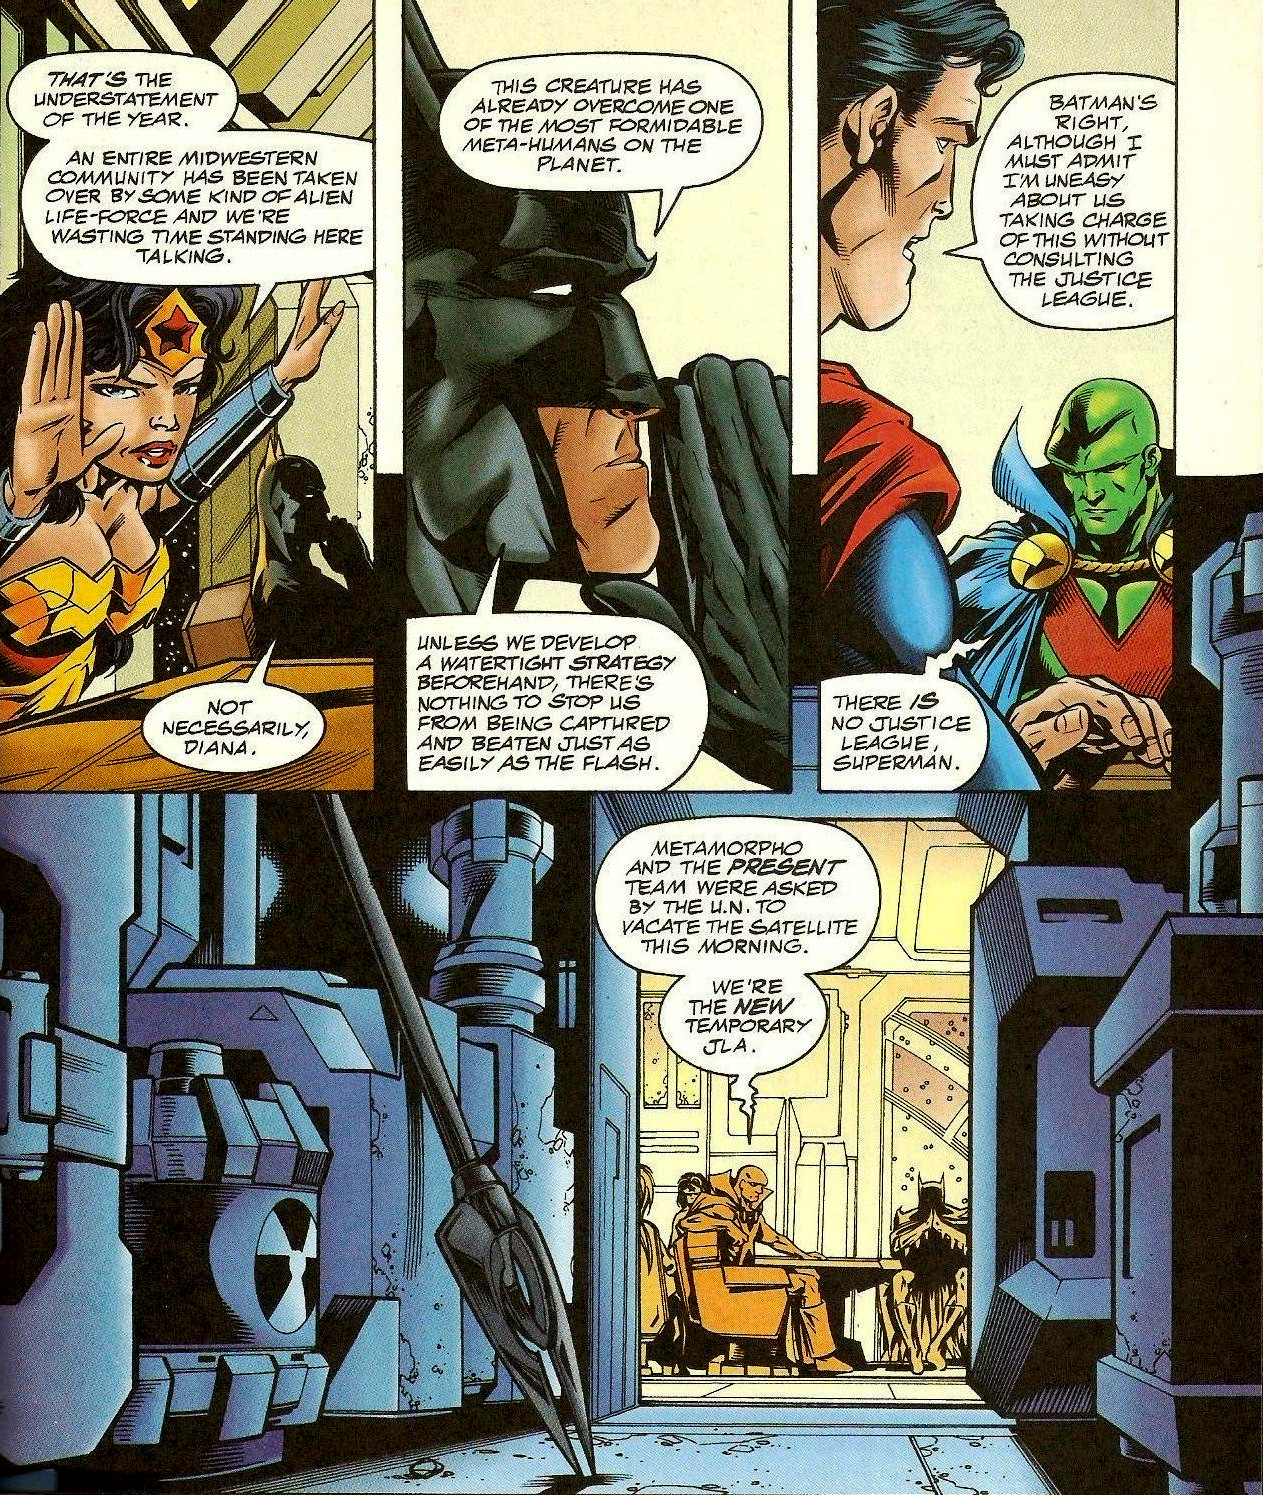 From JLA Secret Files and Origins #1 (1997)